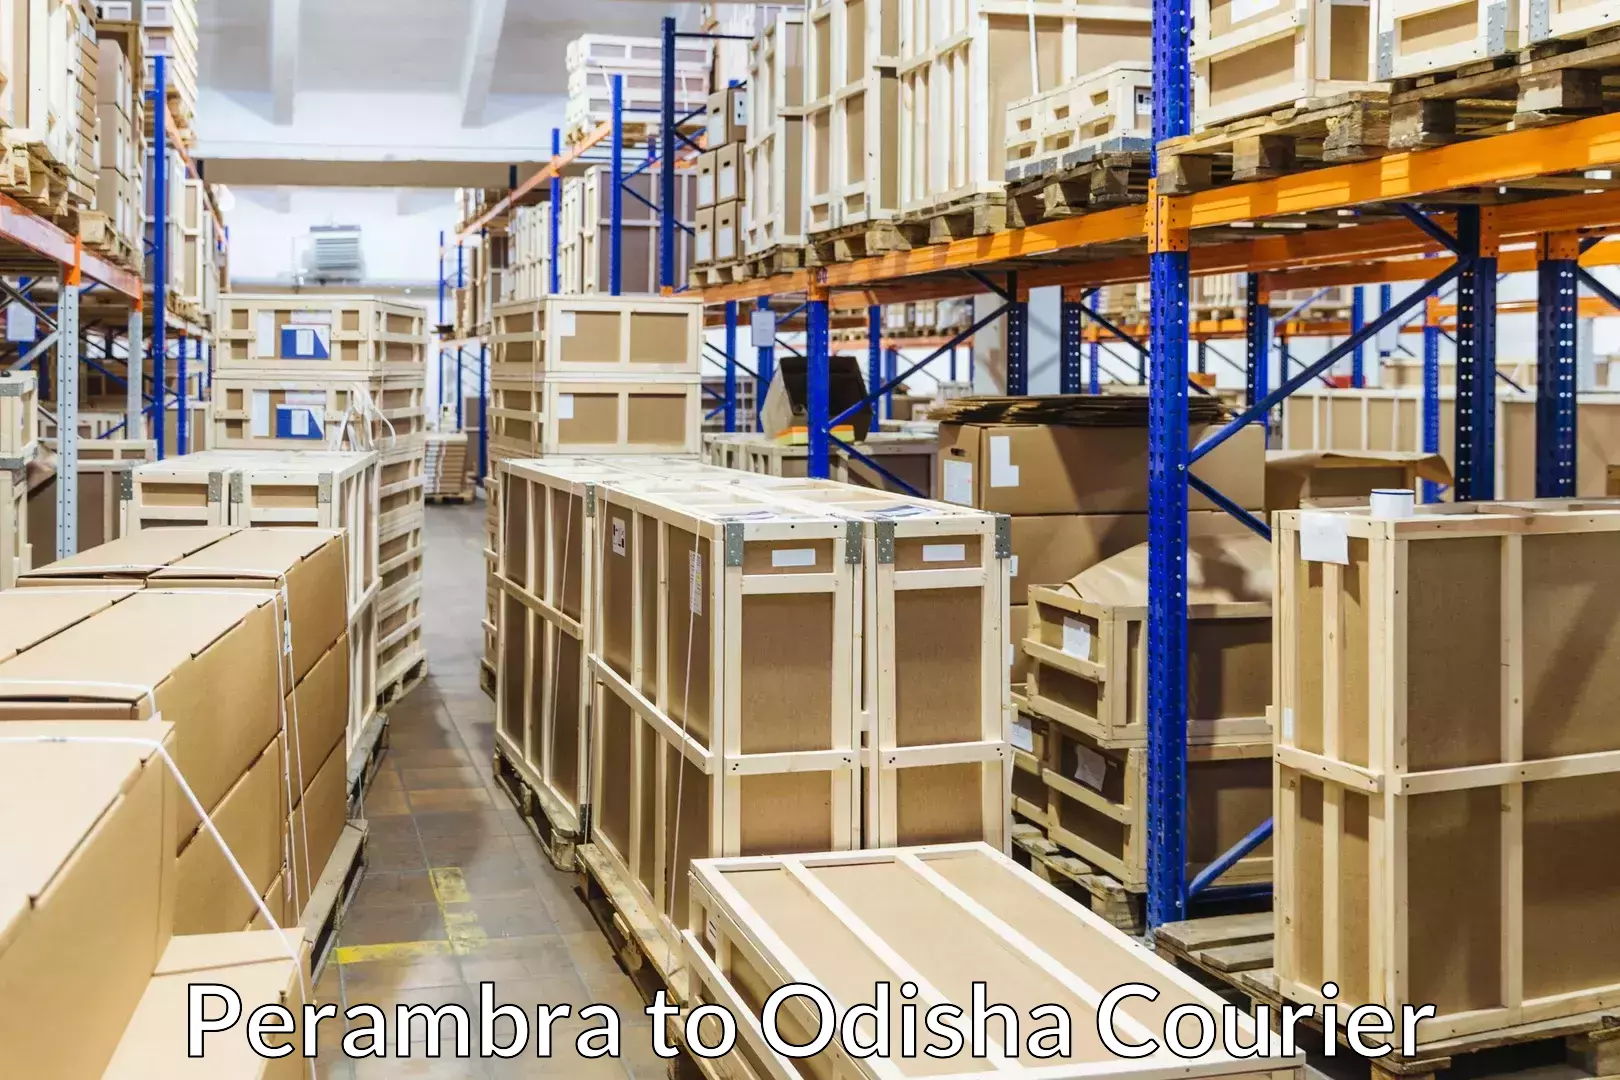 Moving and packing experts Perambra to Odisha